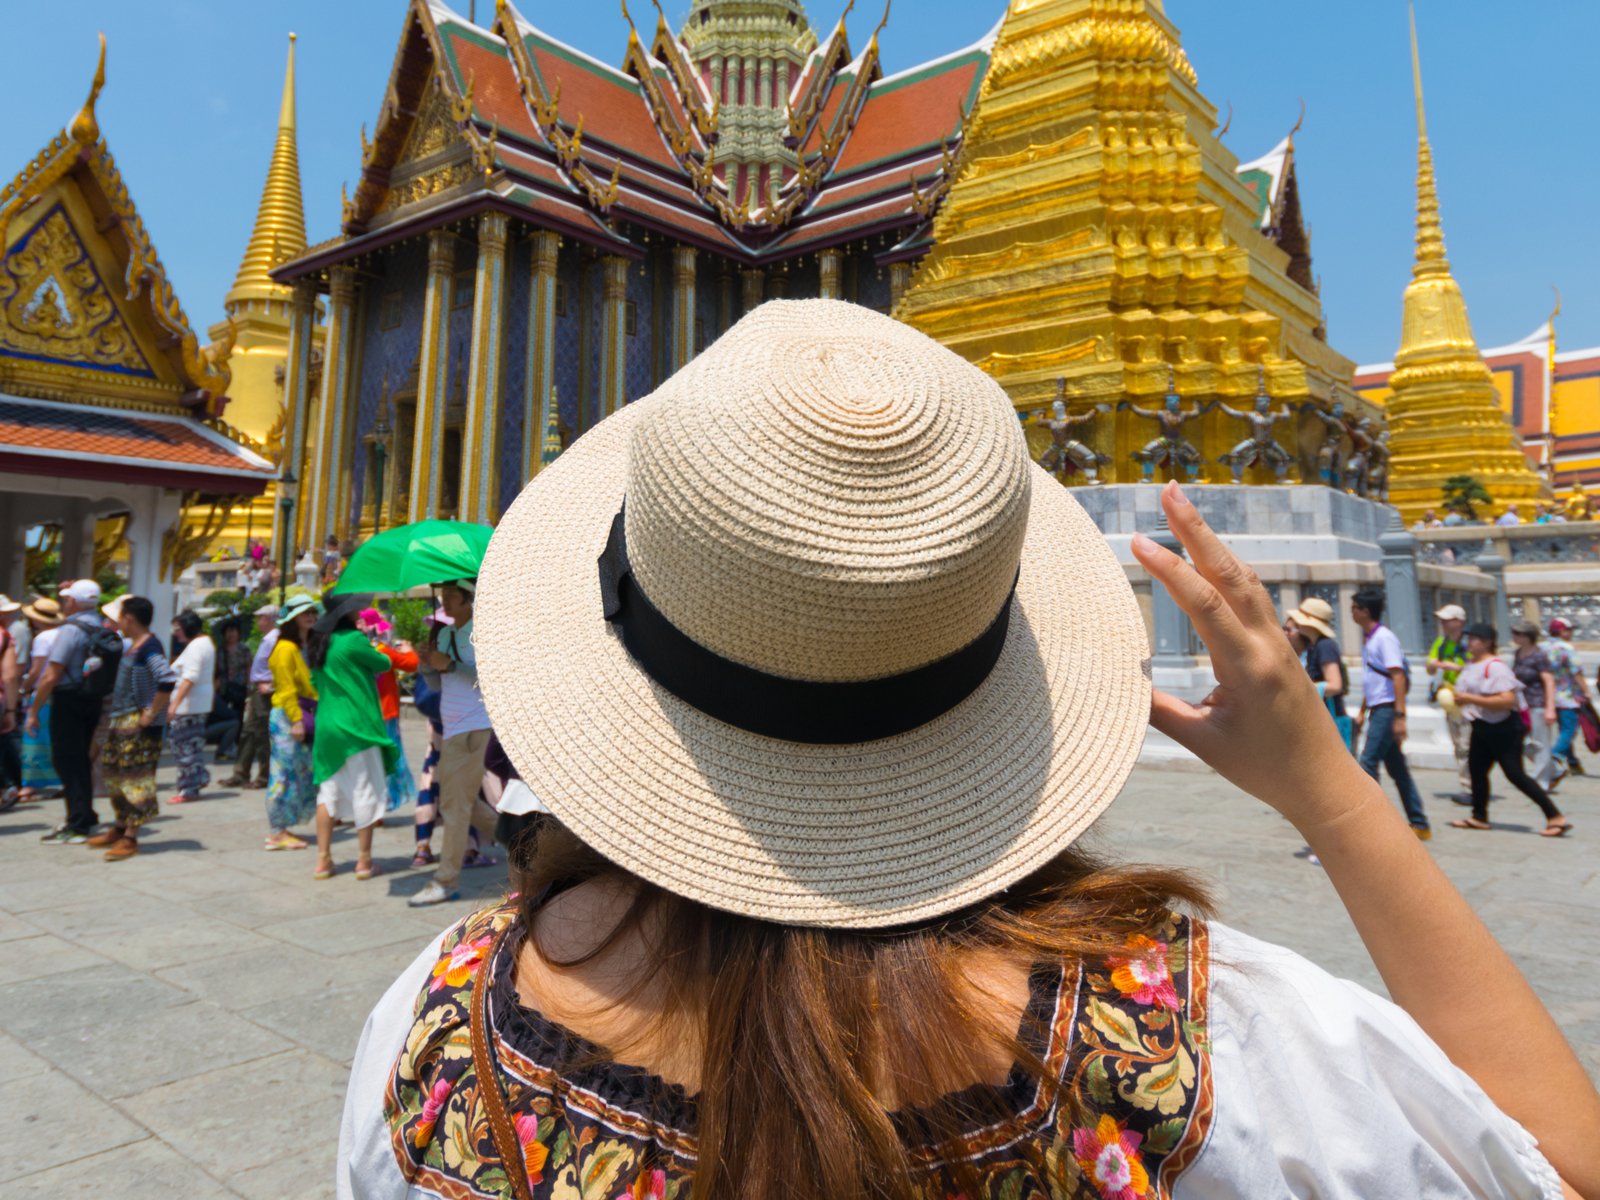 A tourist in Wat Phra Kaew in Bangkok, Thailand.